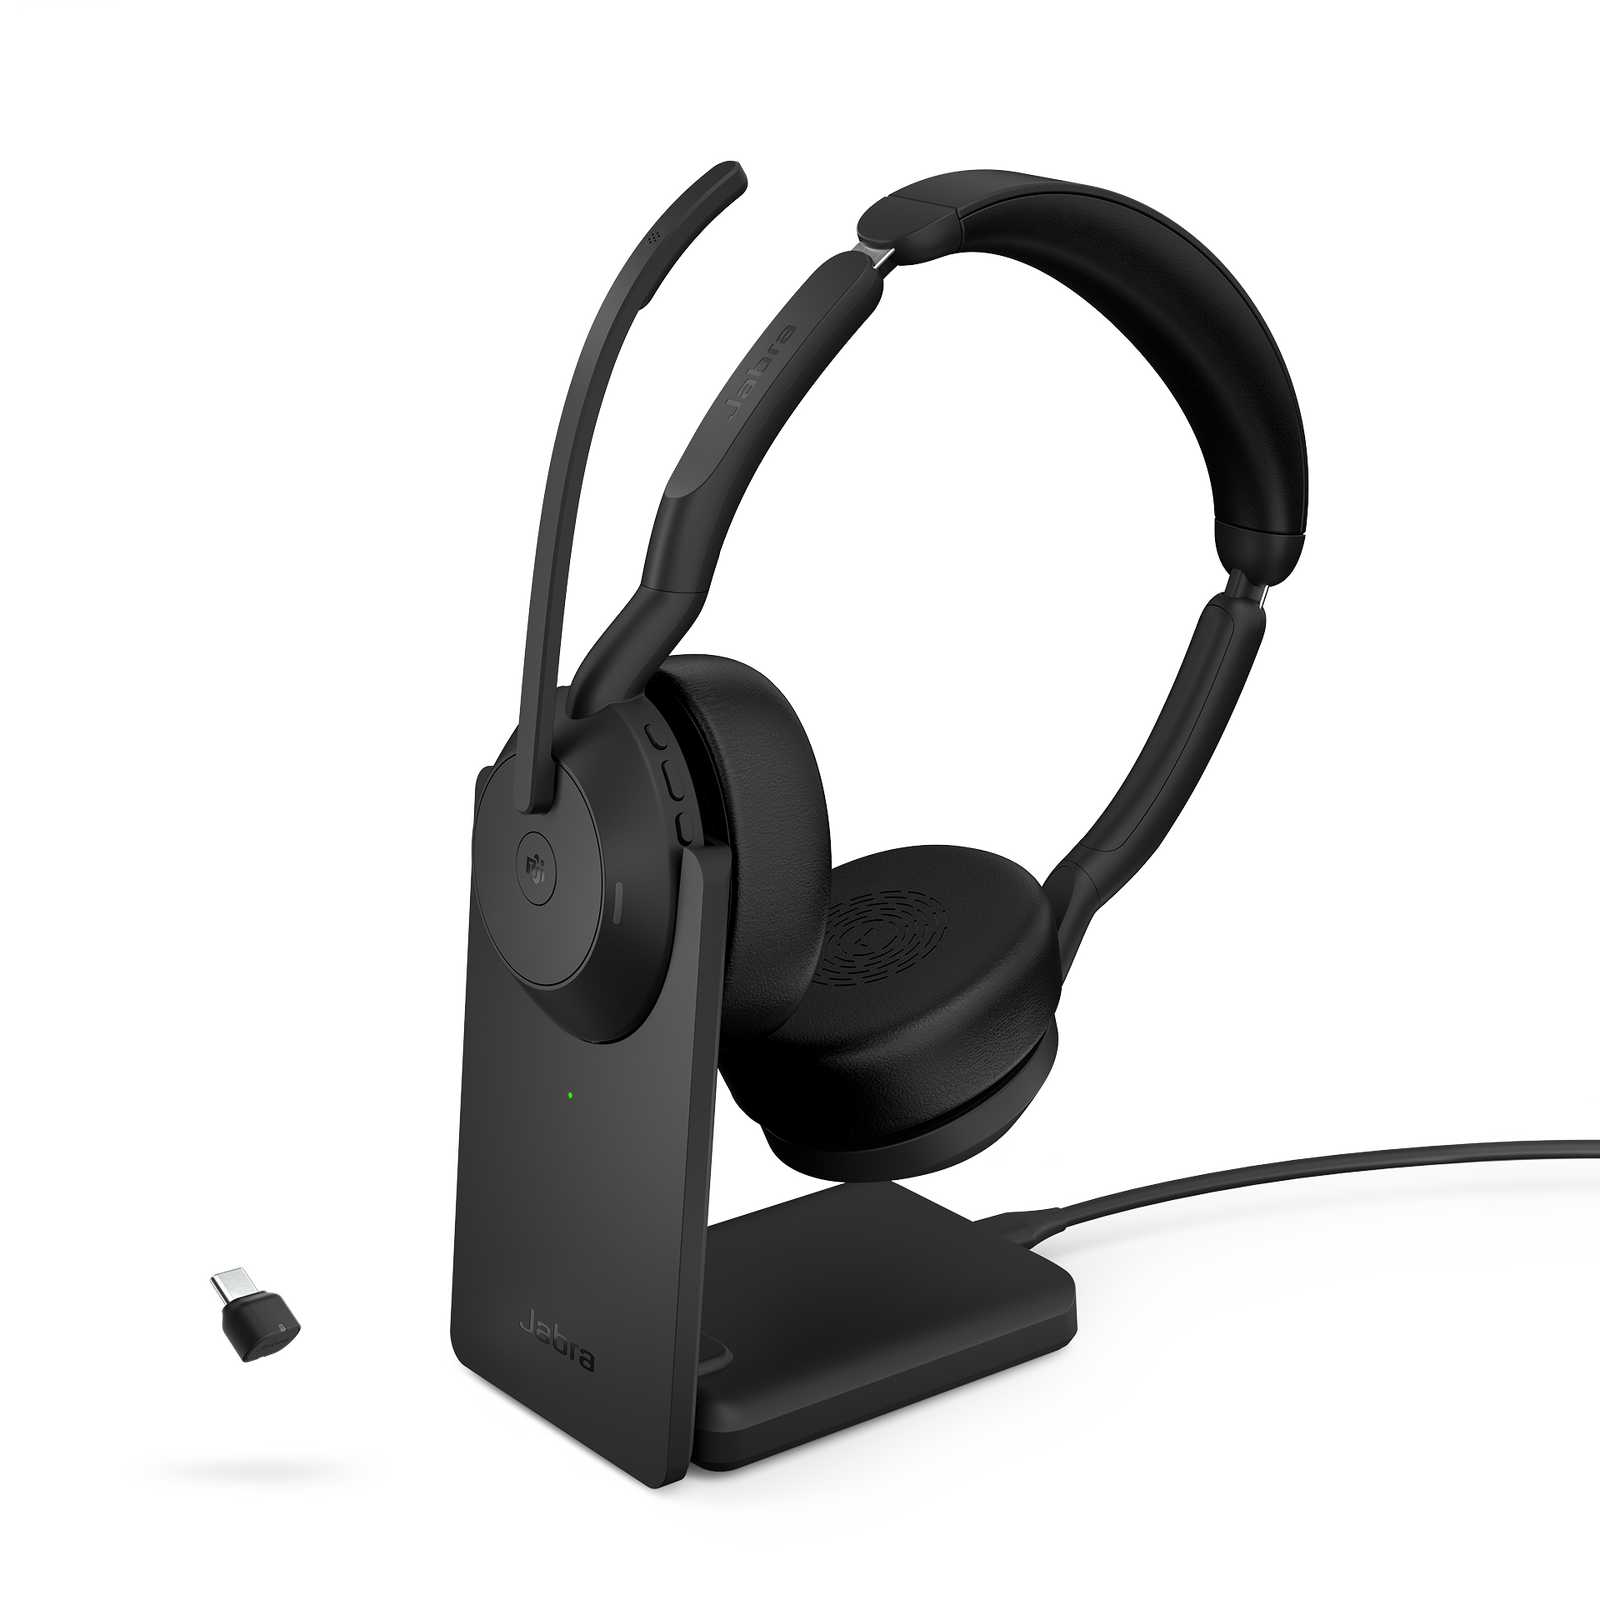 Jabra Evolve 65 On the Ear Bluetooth Wireless Headset - Black for sale  online